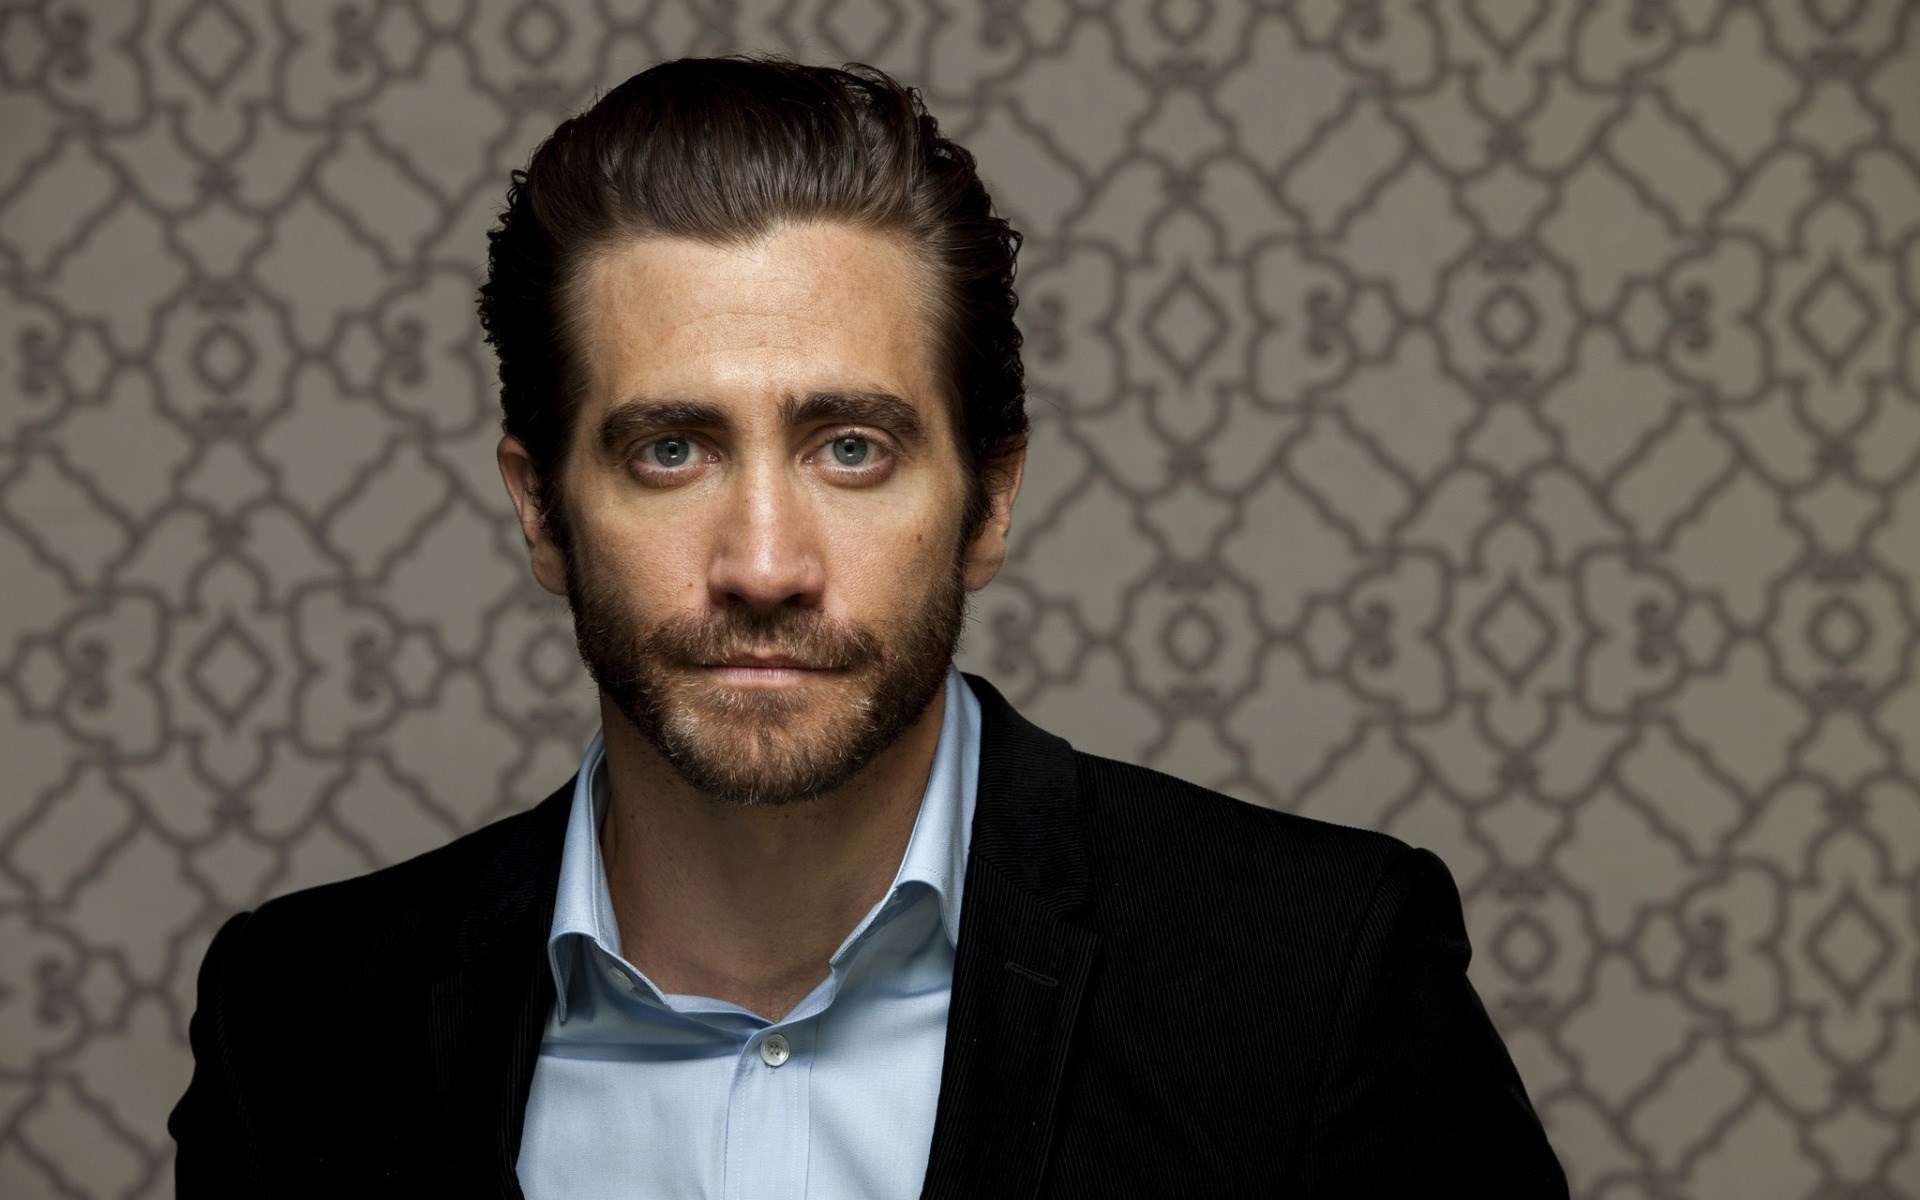 Download imagens jake gyllenhaal, retrato, o ator norte-americano, jacob benjamin gyllenhaal, sessão de fotos, atores populares, hollywood